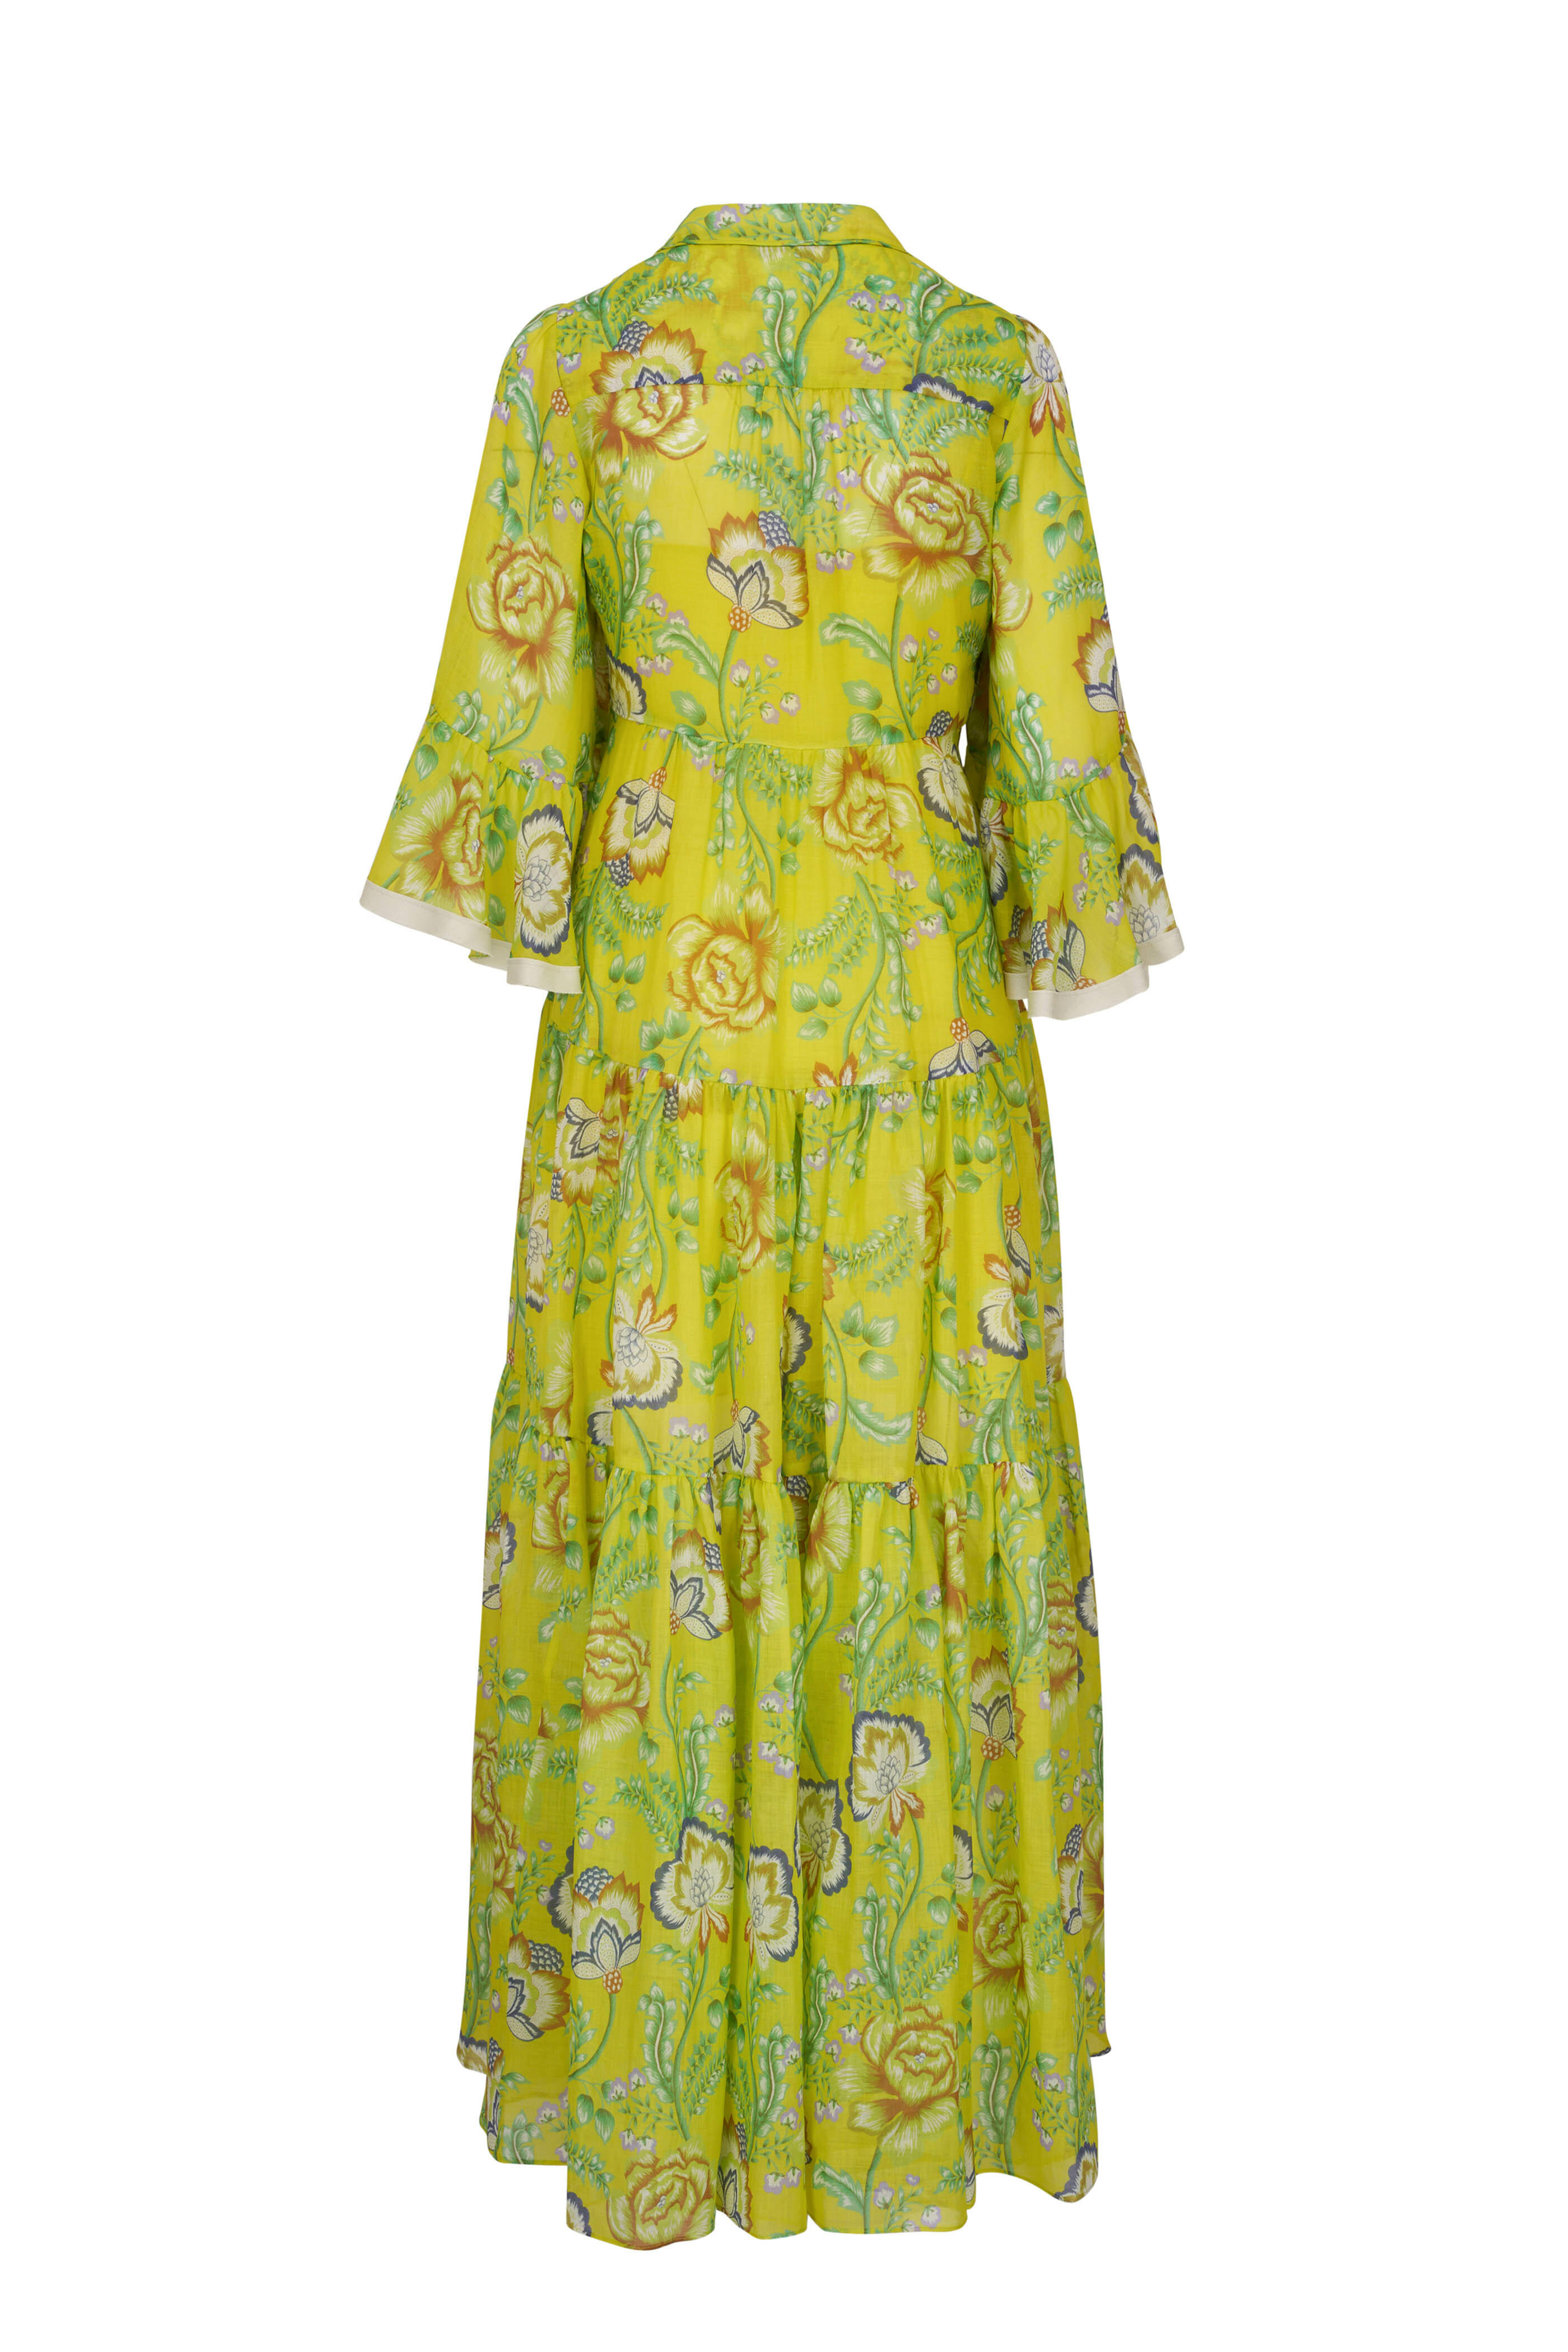 Dorothee Schumacher - Natural Volumes Yellow Floral Ruffle Maxi Dress